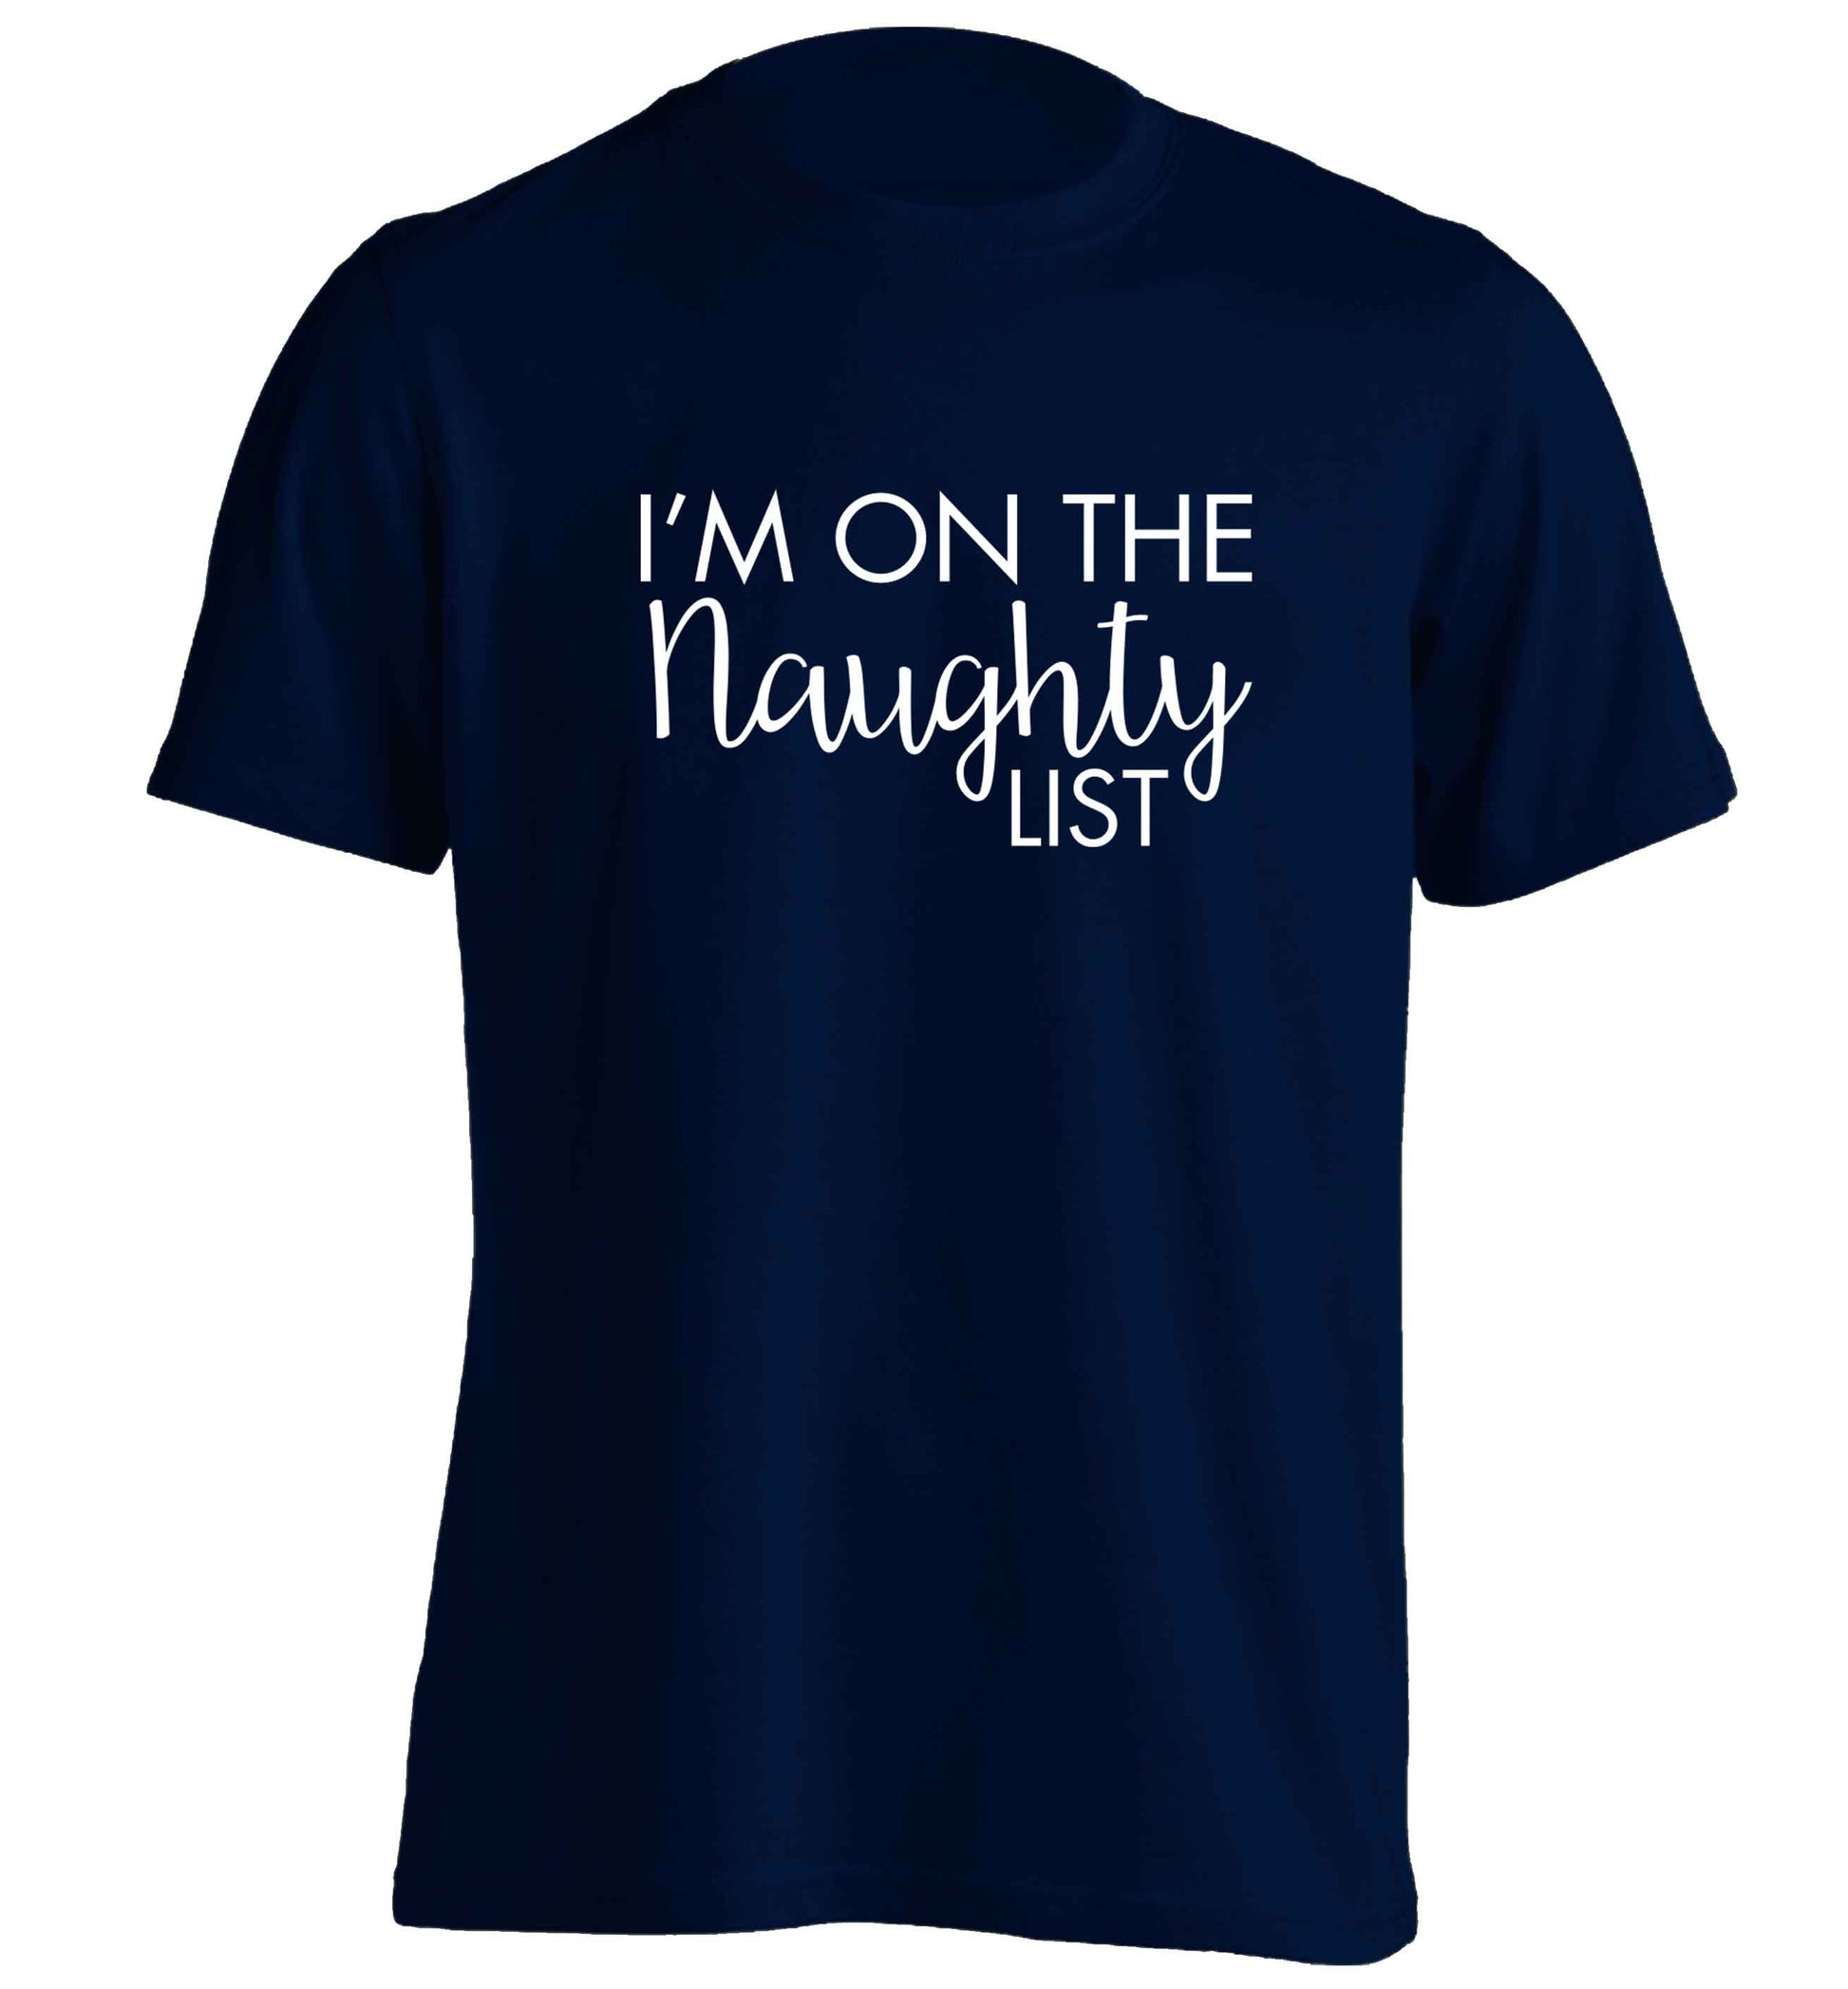 I'm on the naughty list adults unisex navy Tshirt 2XL